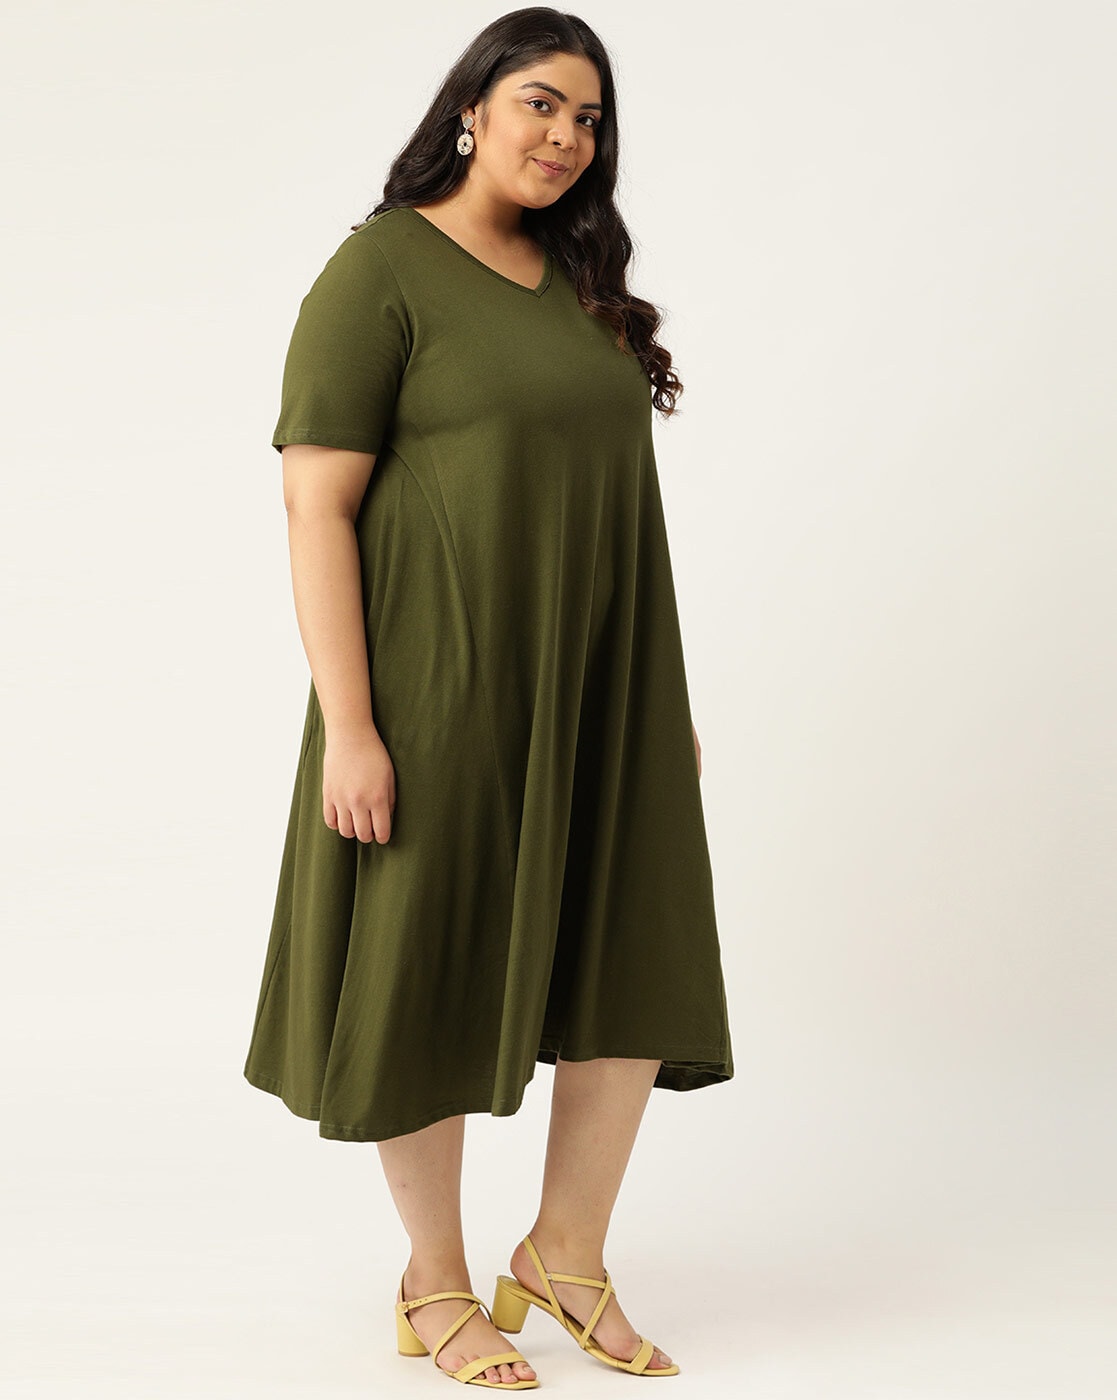 Meghan Markle's 8 Best Olive Green Dress Moments - Dress Like A Duchess